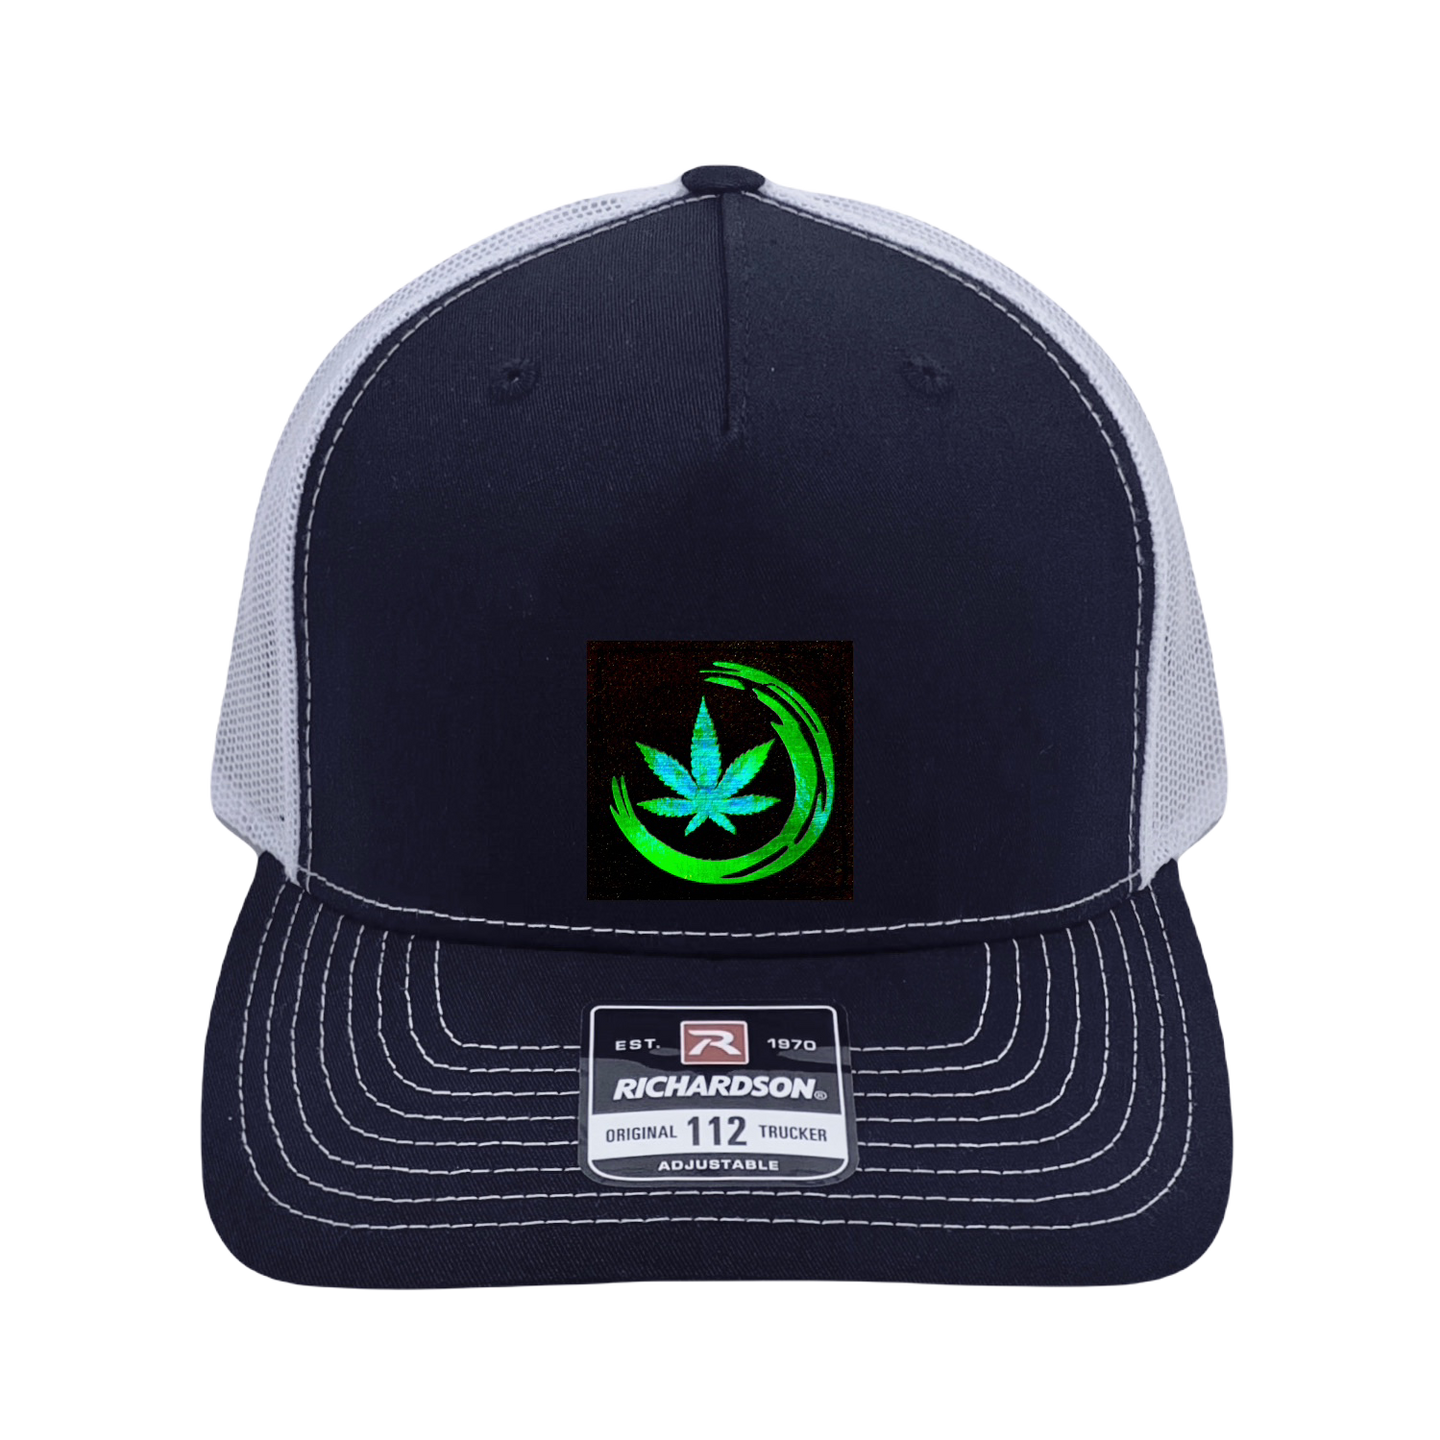 Richardson 112 trucker hat, black/white five panel with black/holo green Zen Cannabis